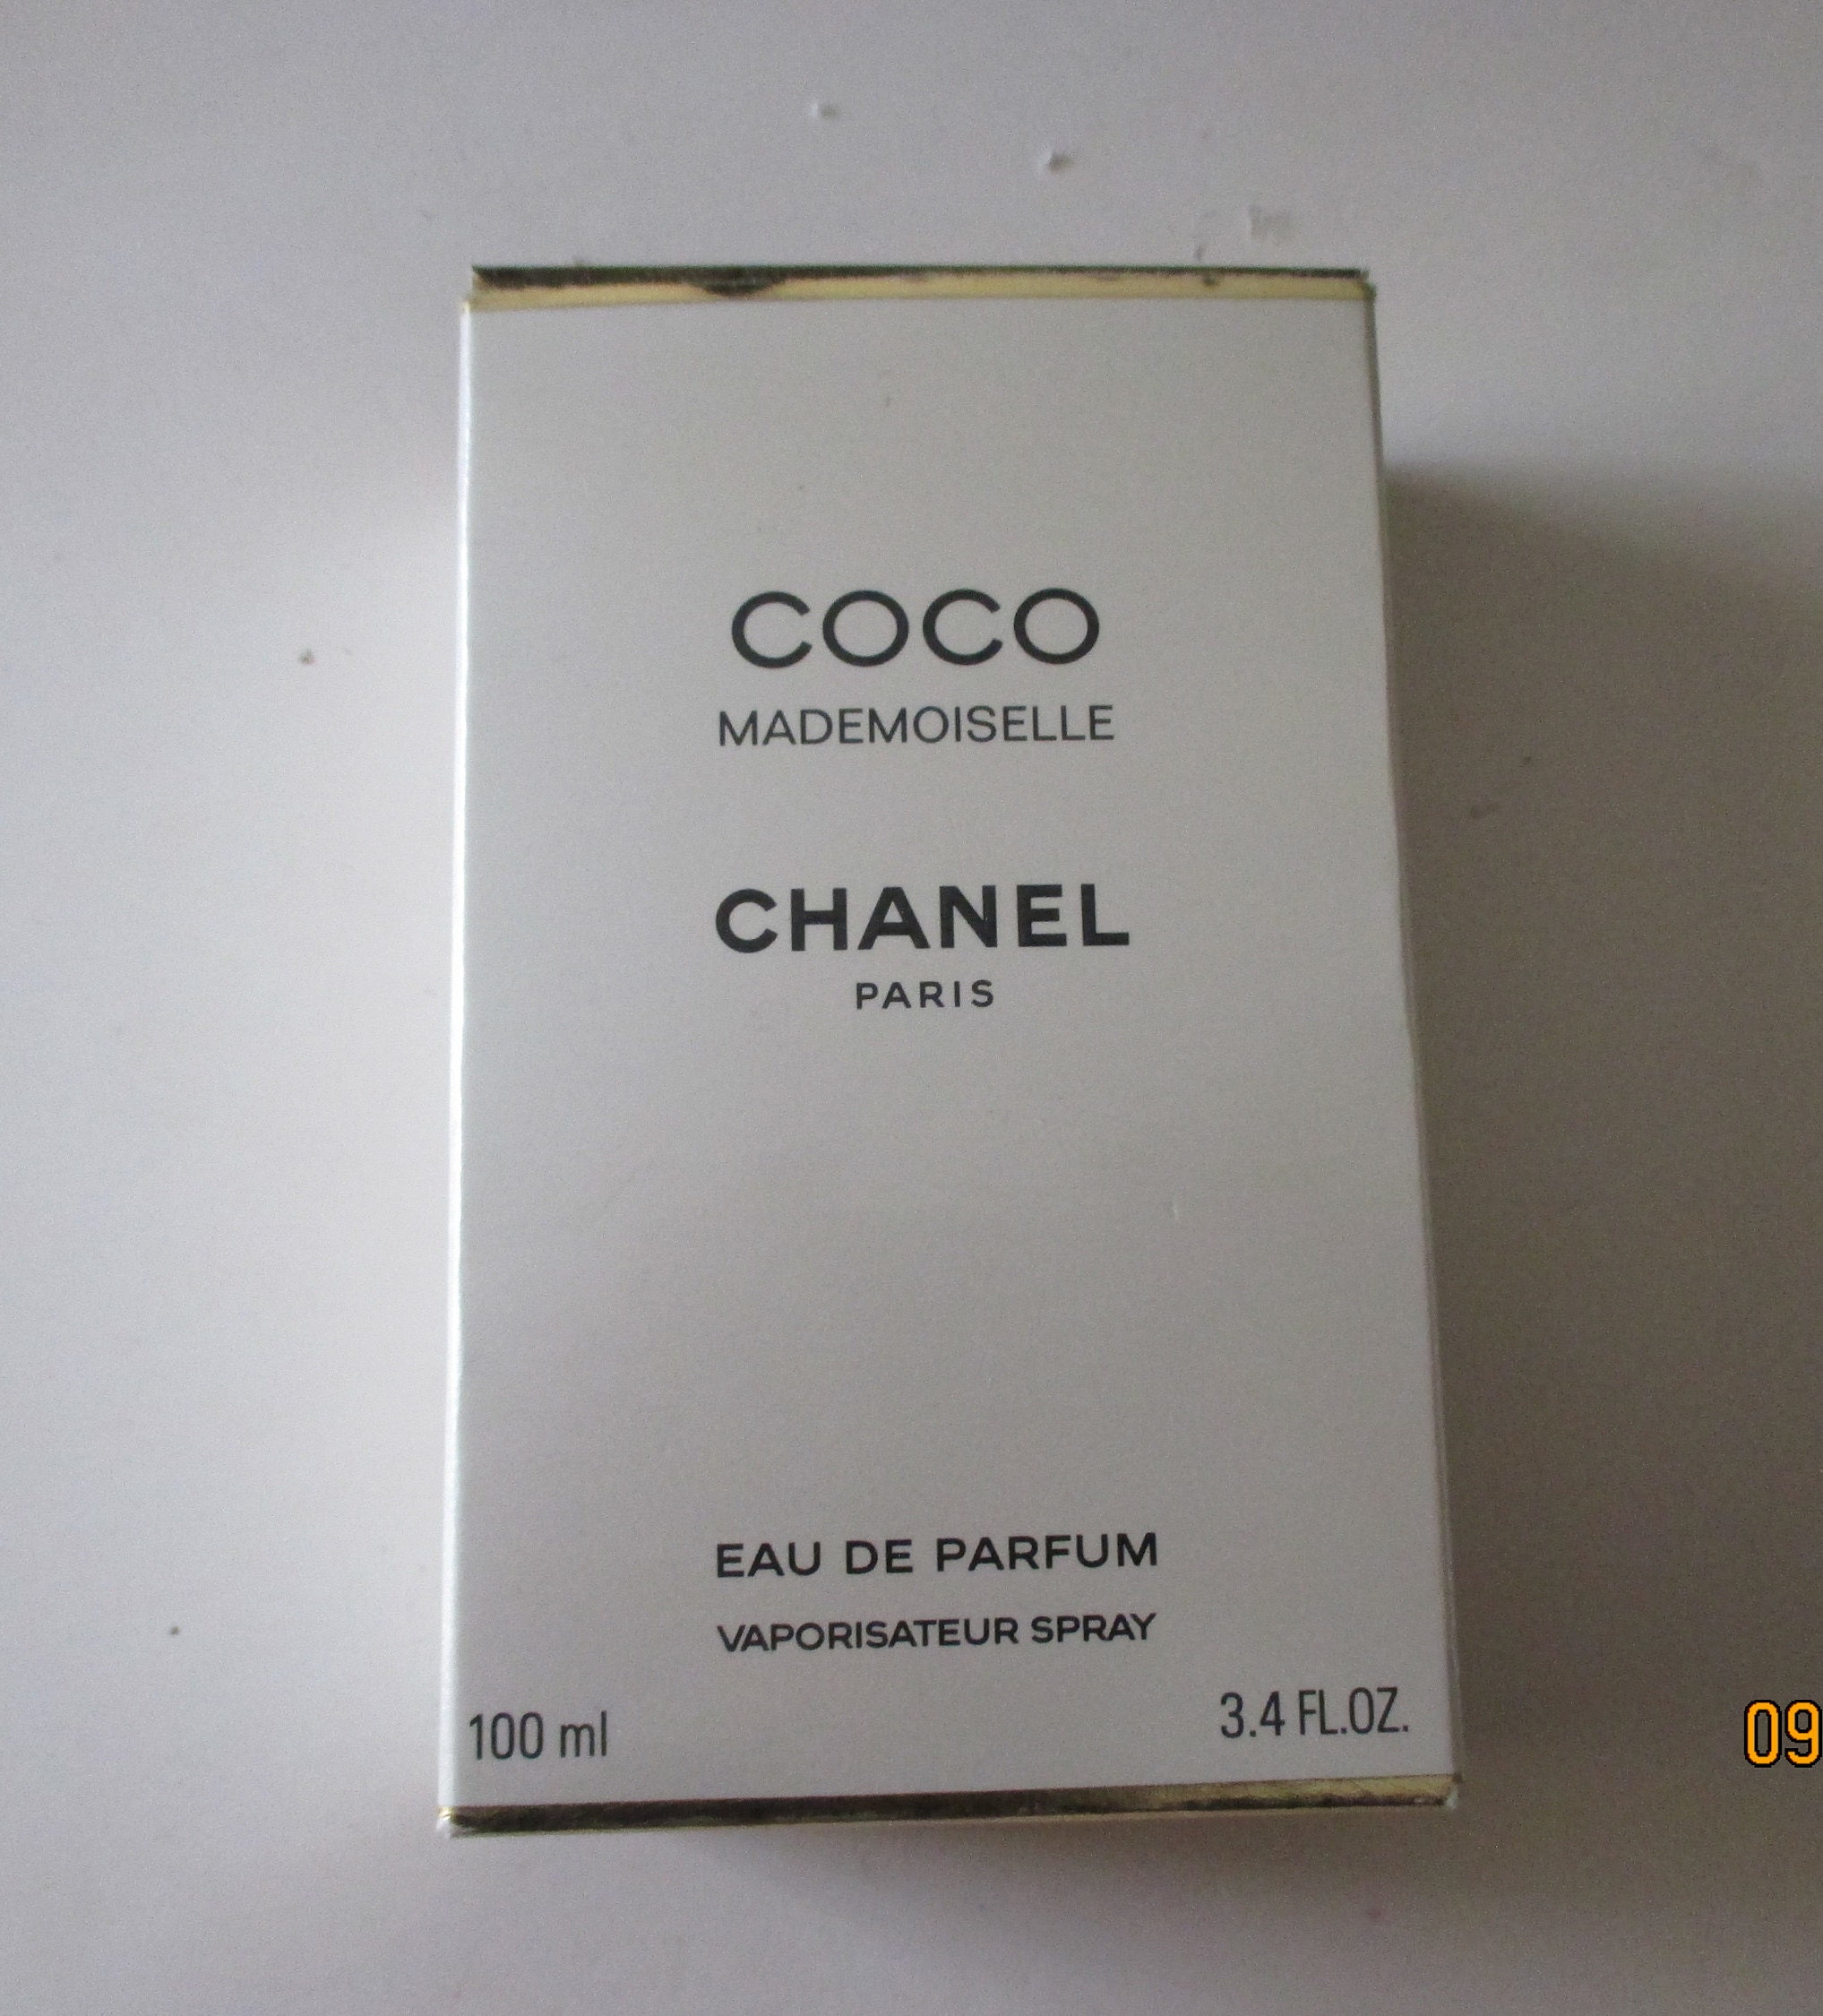 Koko Madam Paris Eau de Parfum Inspired By Chanel Coco Mademoiselle